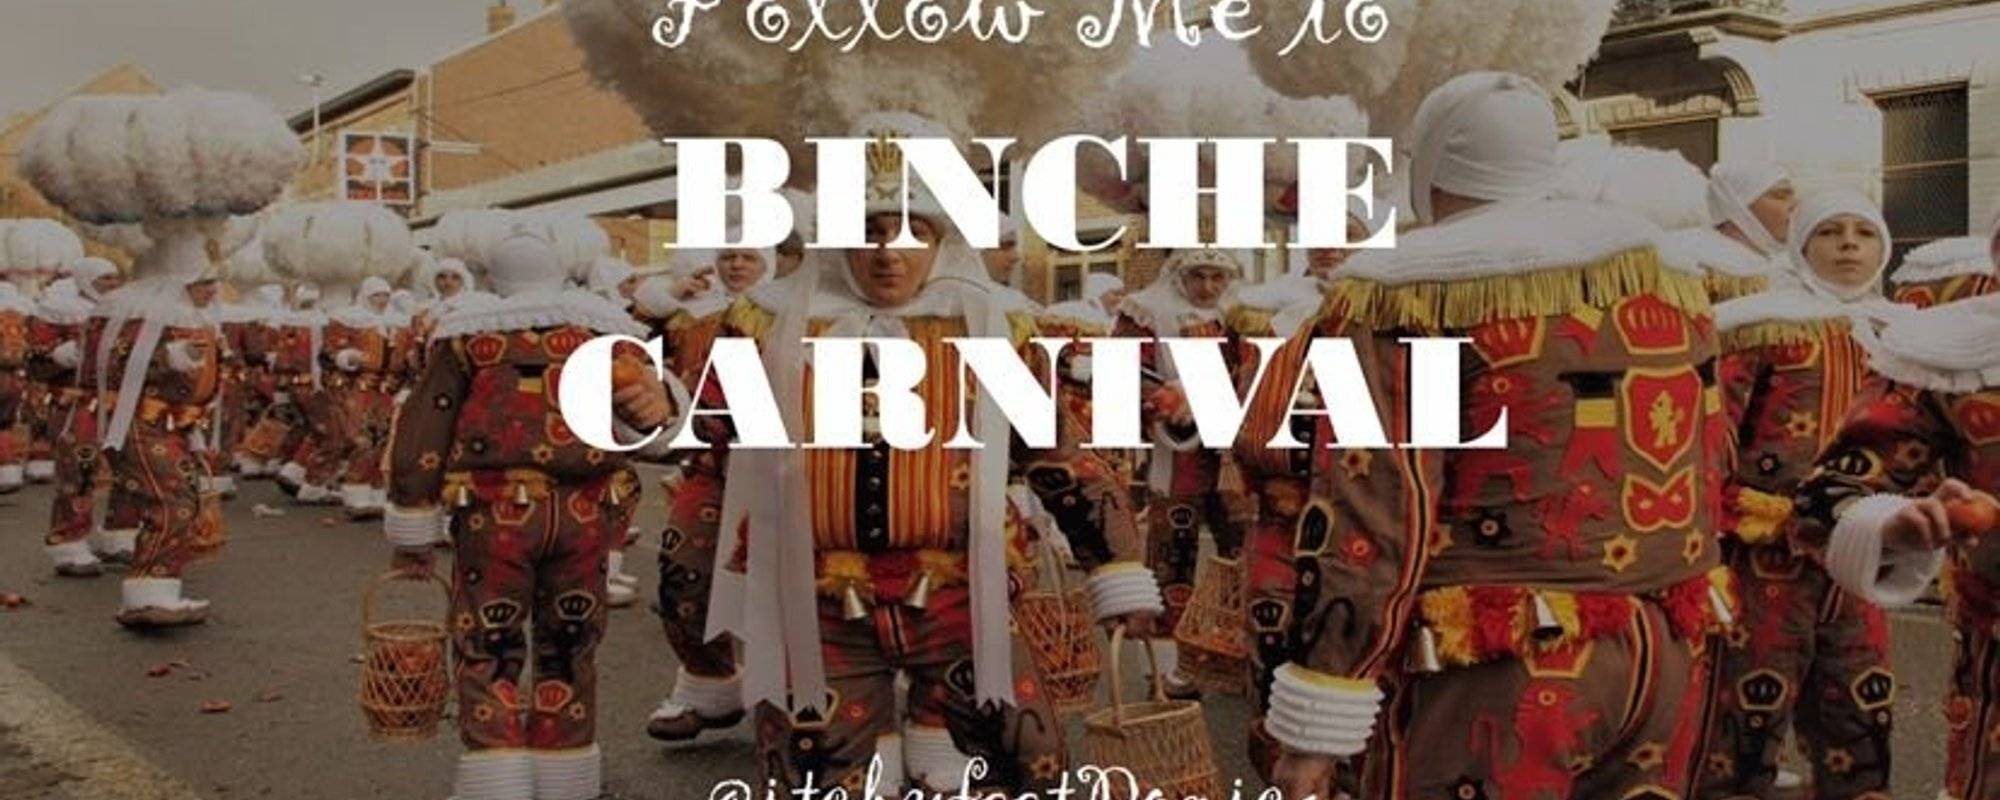 #205 SteemitBoard Carnival Challenge 🎉🎊 Follow Me to Binche Carnival (40+ photos) | 班什狂欢节~海量图片报道